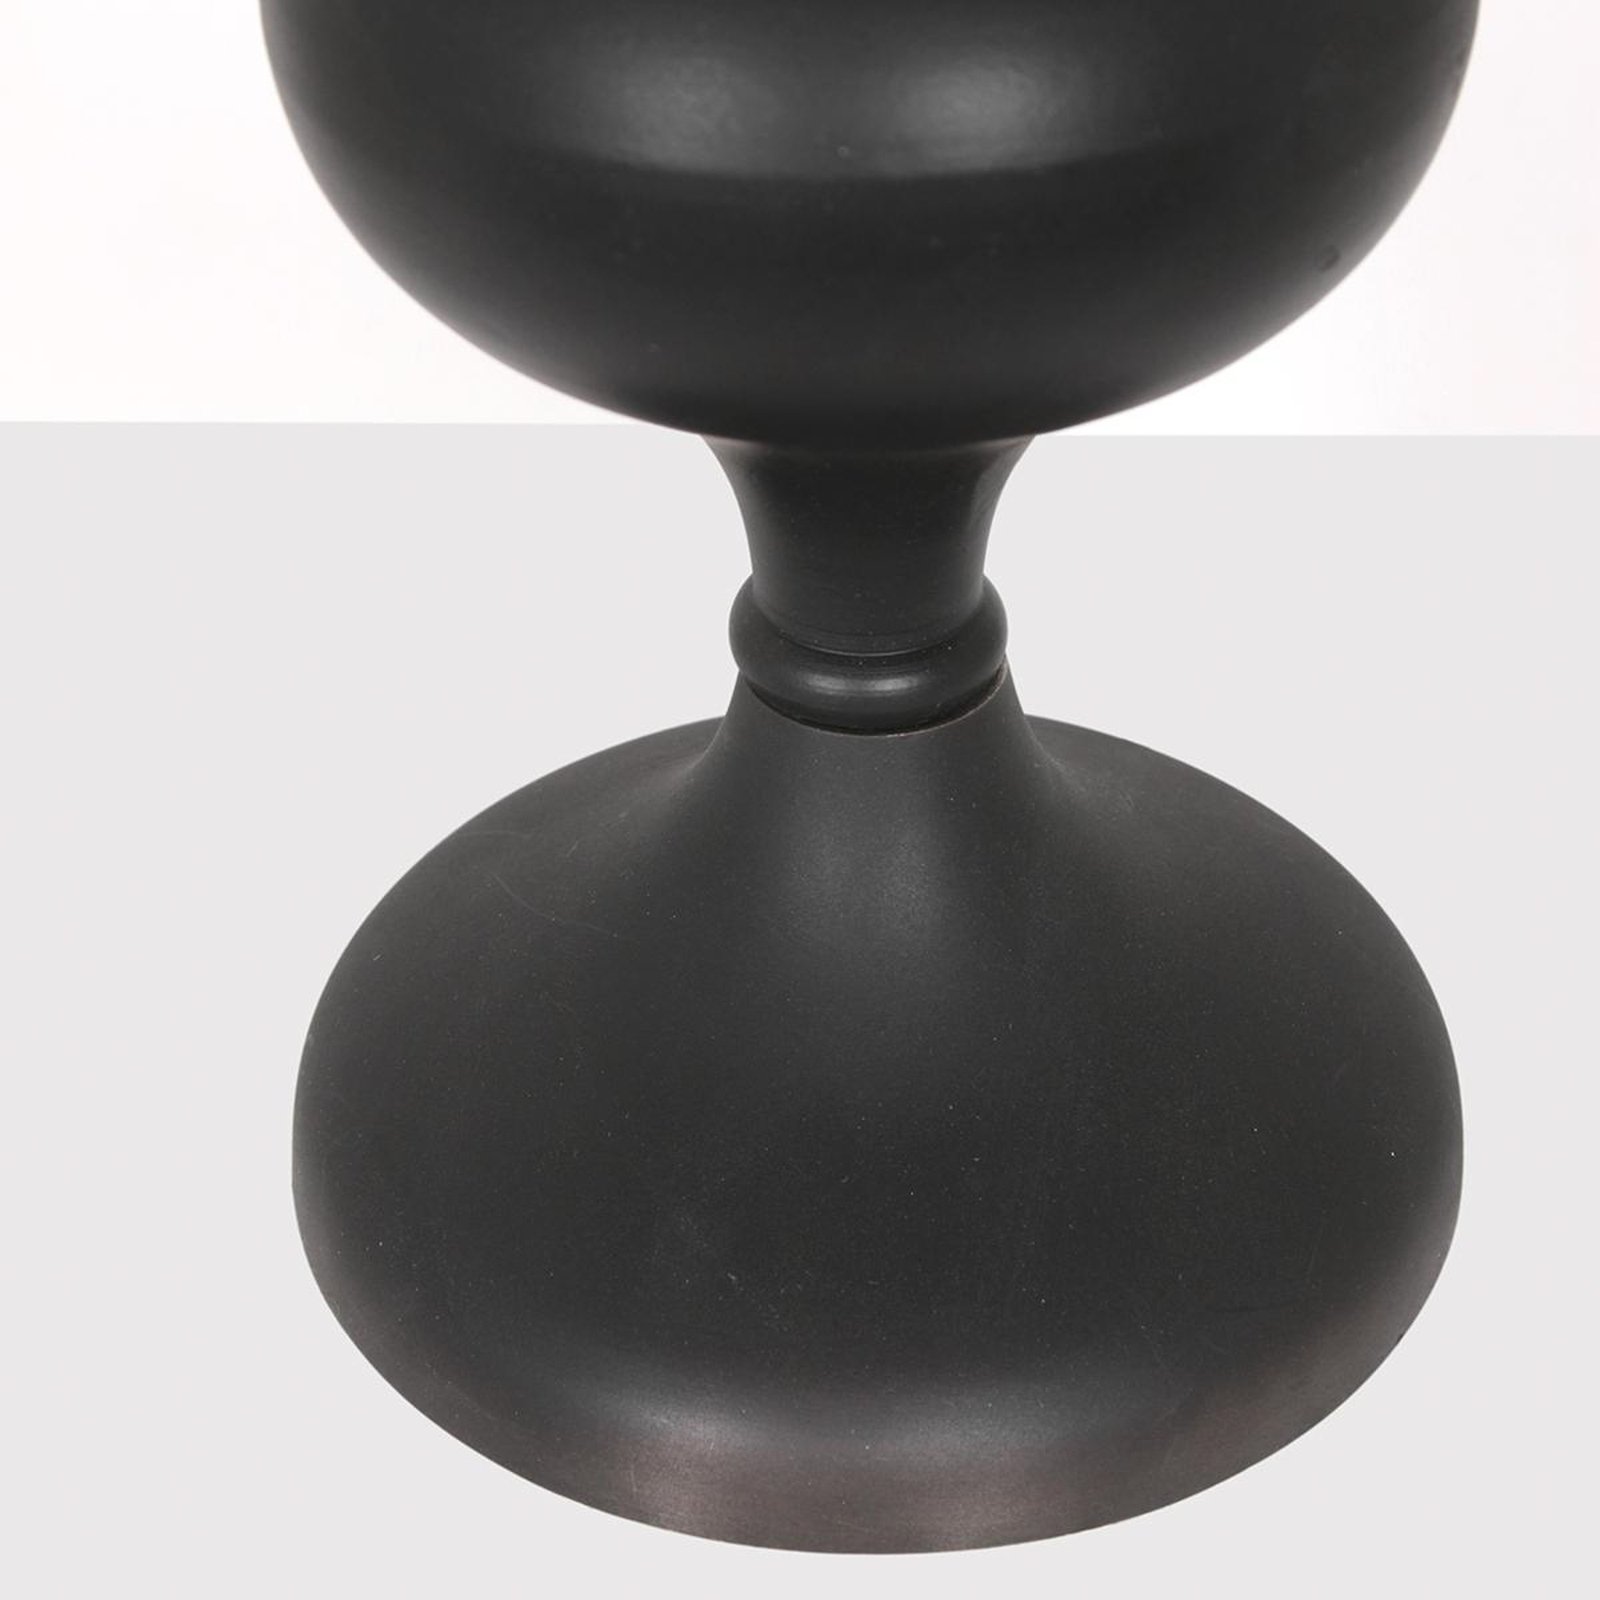 Lyons 3749ZW table lamp, black/natural wickerwork